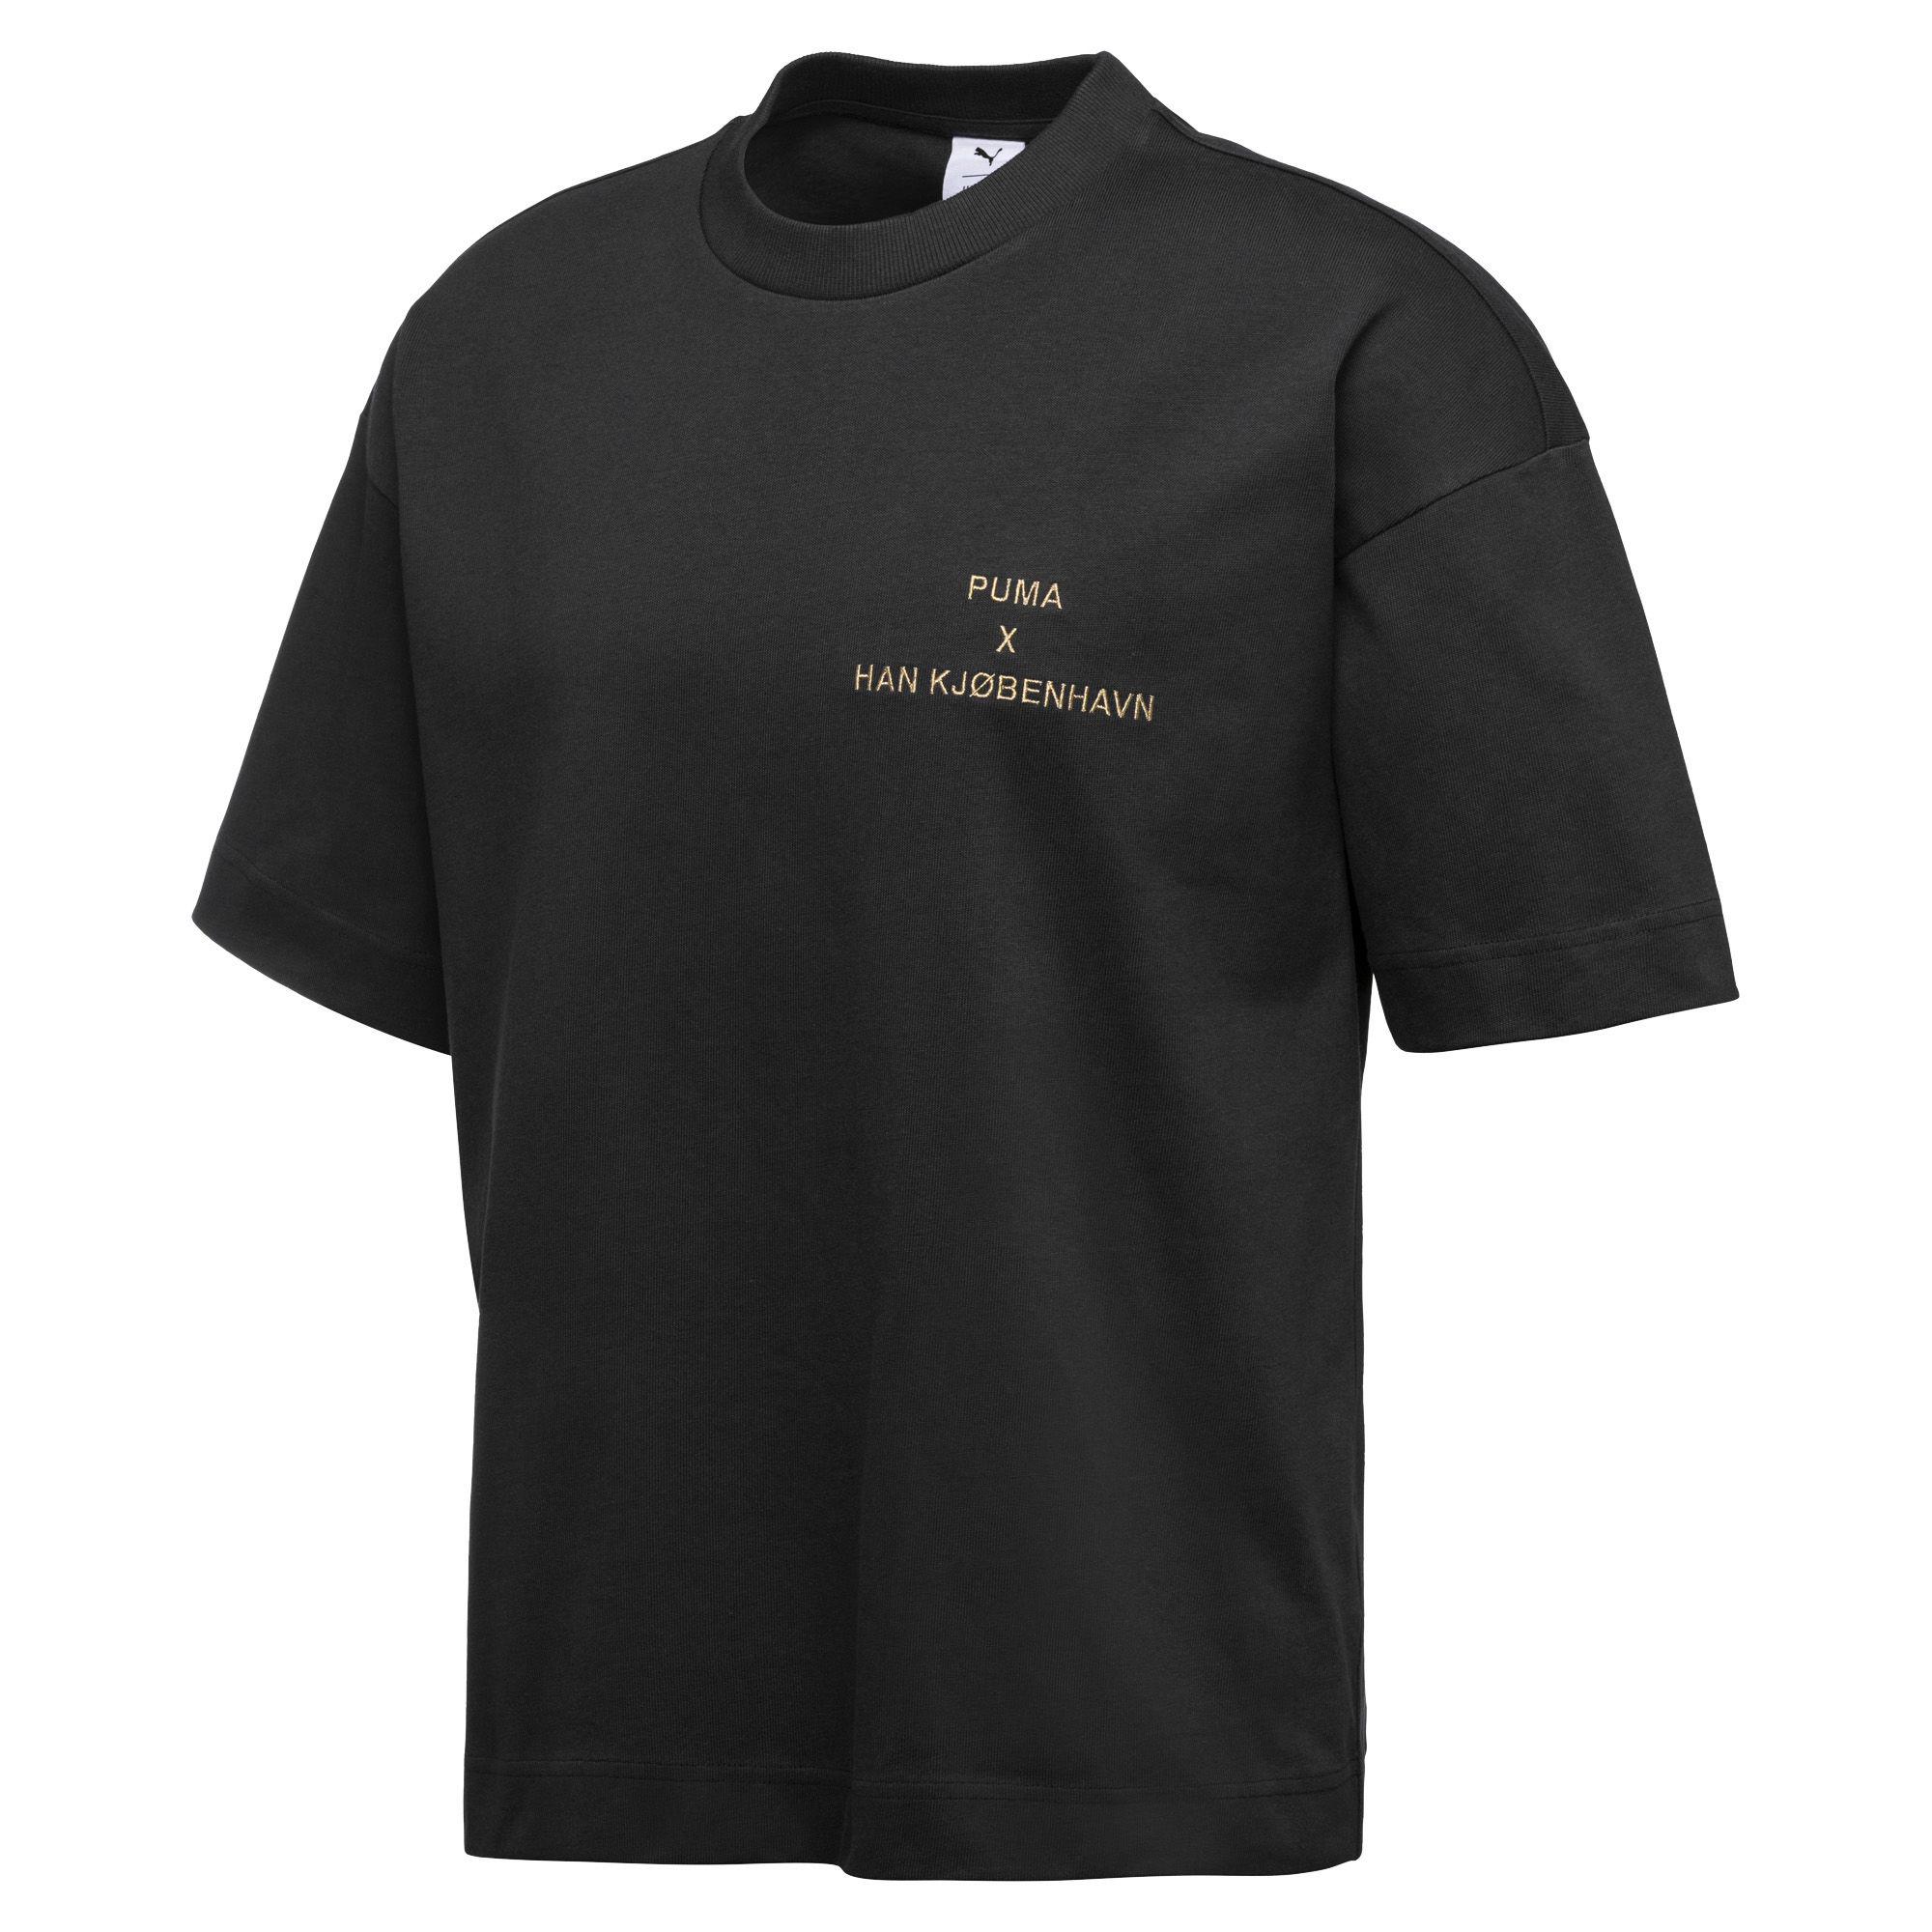 PUMA Cotton X Han Kjøbenhavn T-shirt in Black for Men - Lyst